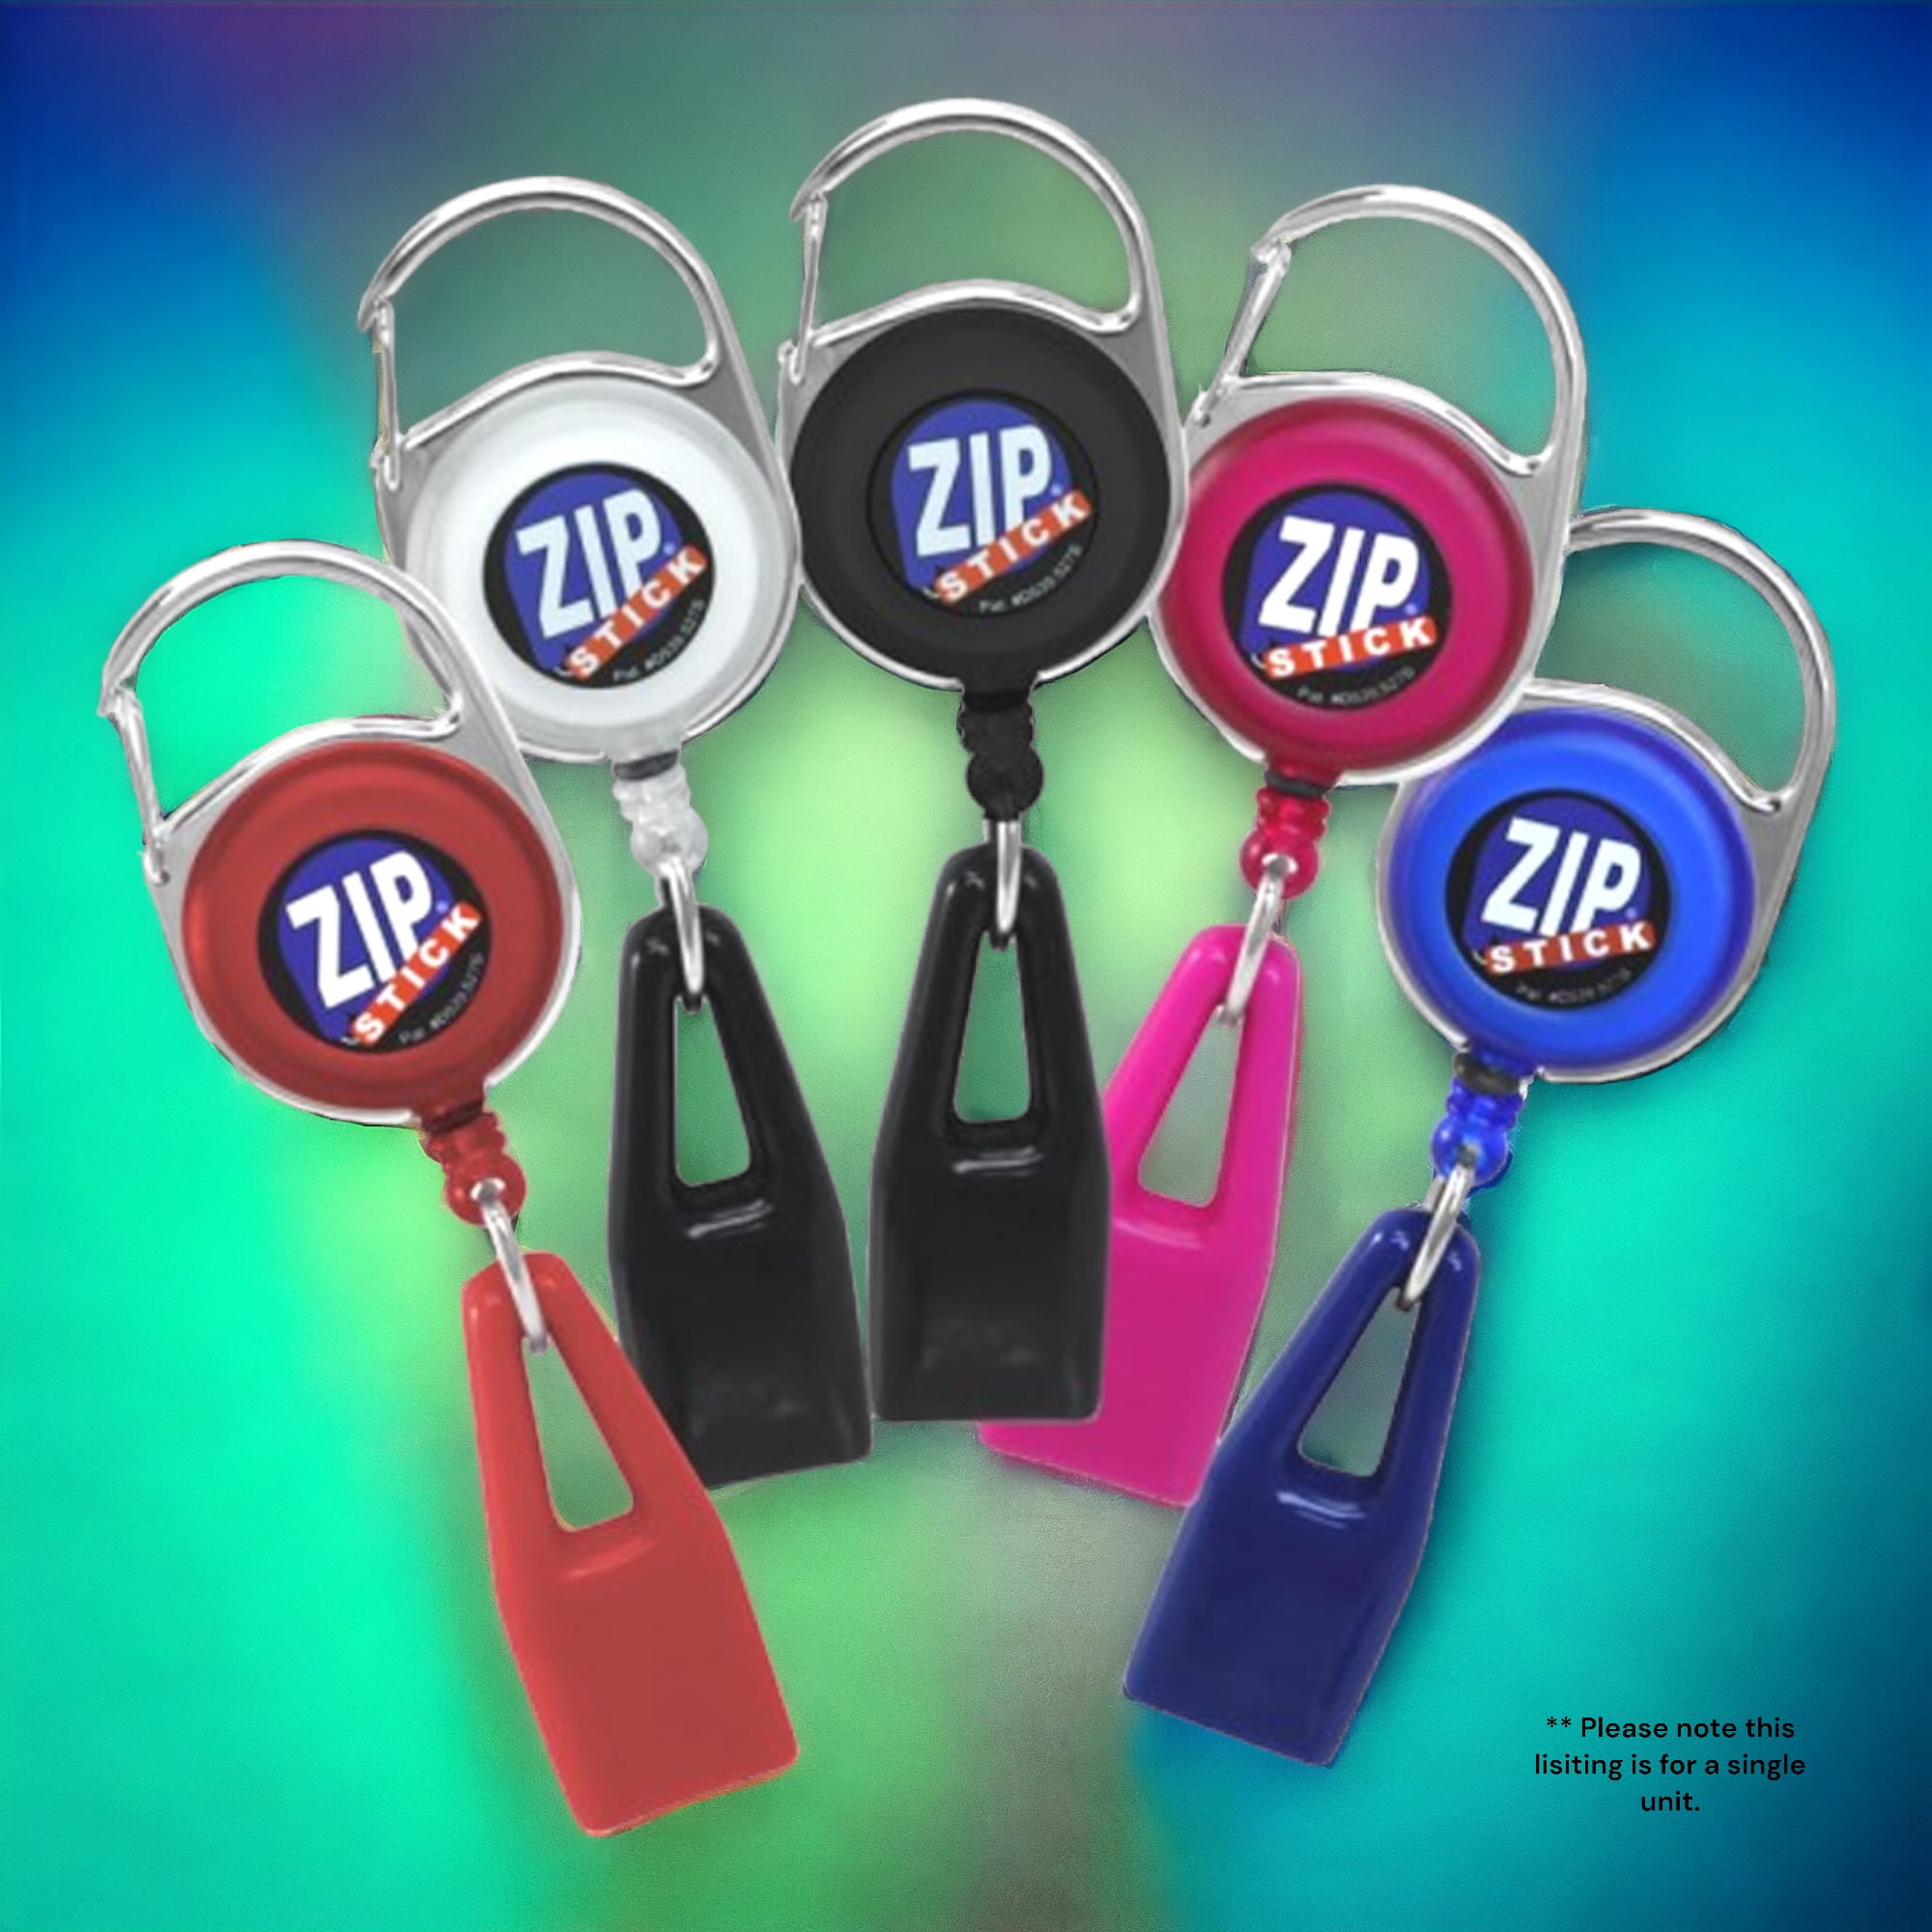 Zip Stick Zip Stick Retractable Lip Balm Holder- Assorted Colors  Multi-Colored 